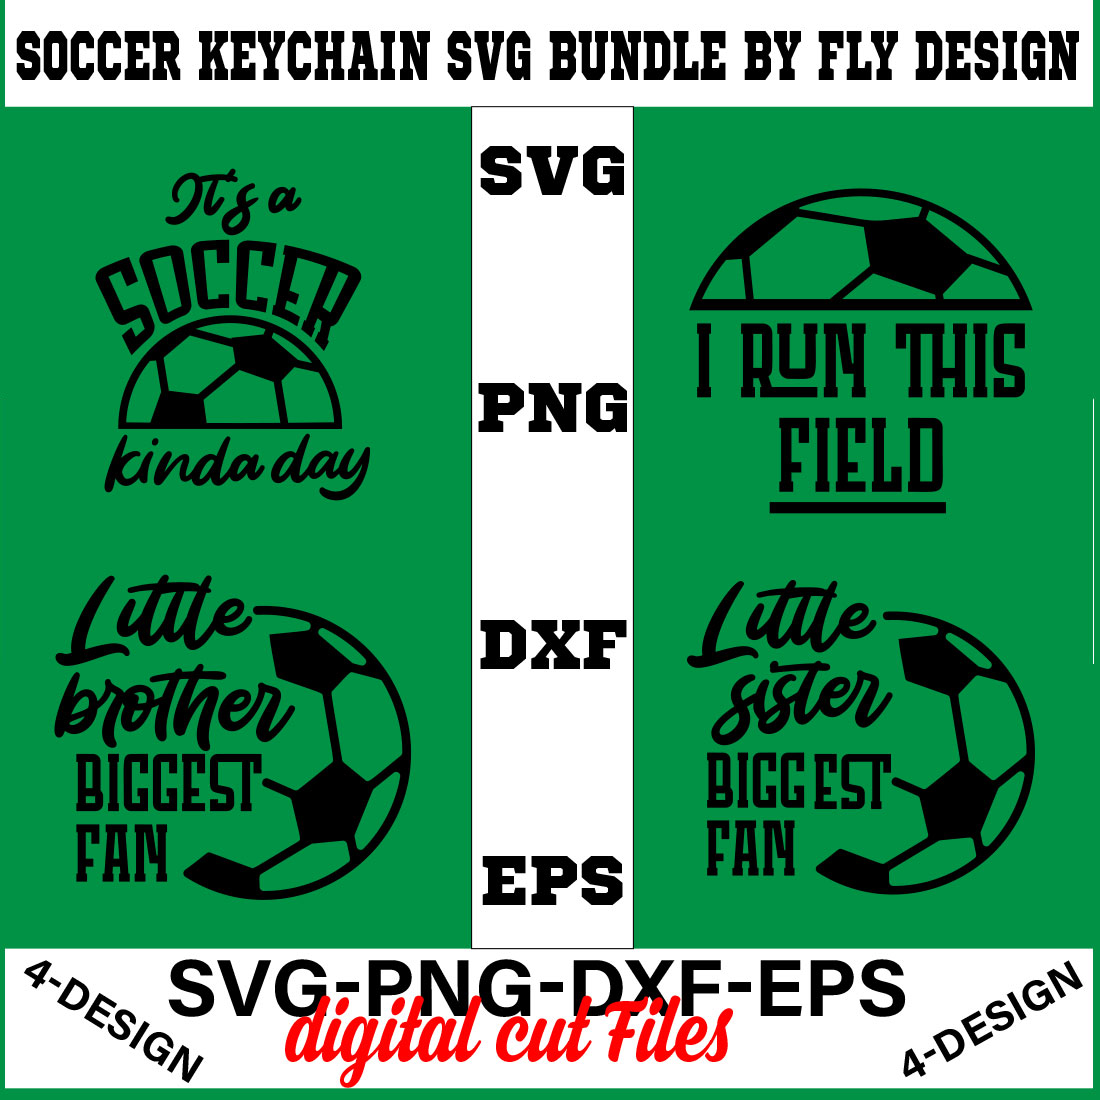 Soccer SVG T-shirt Bundle by Fly Design Vol-02 cover image.